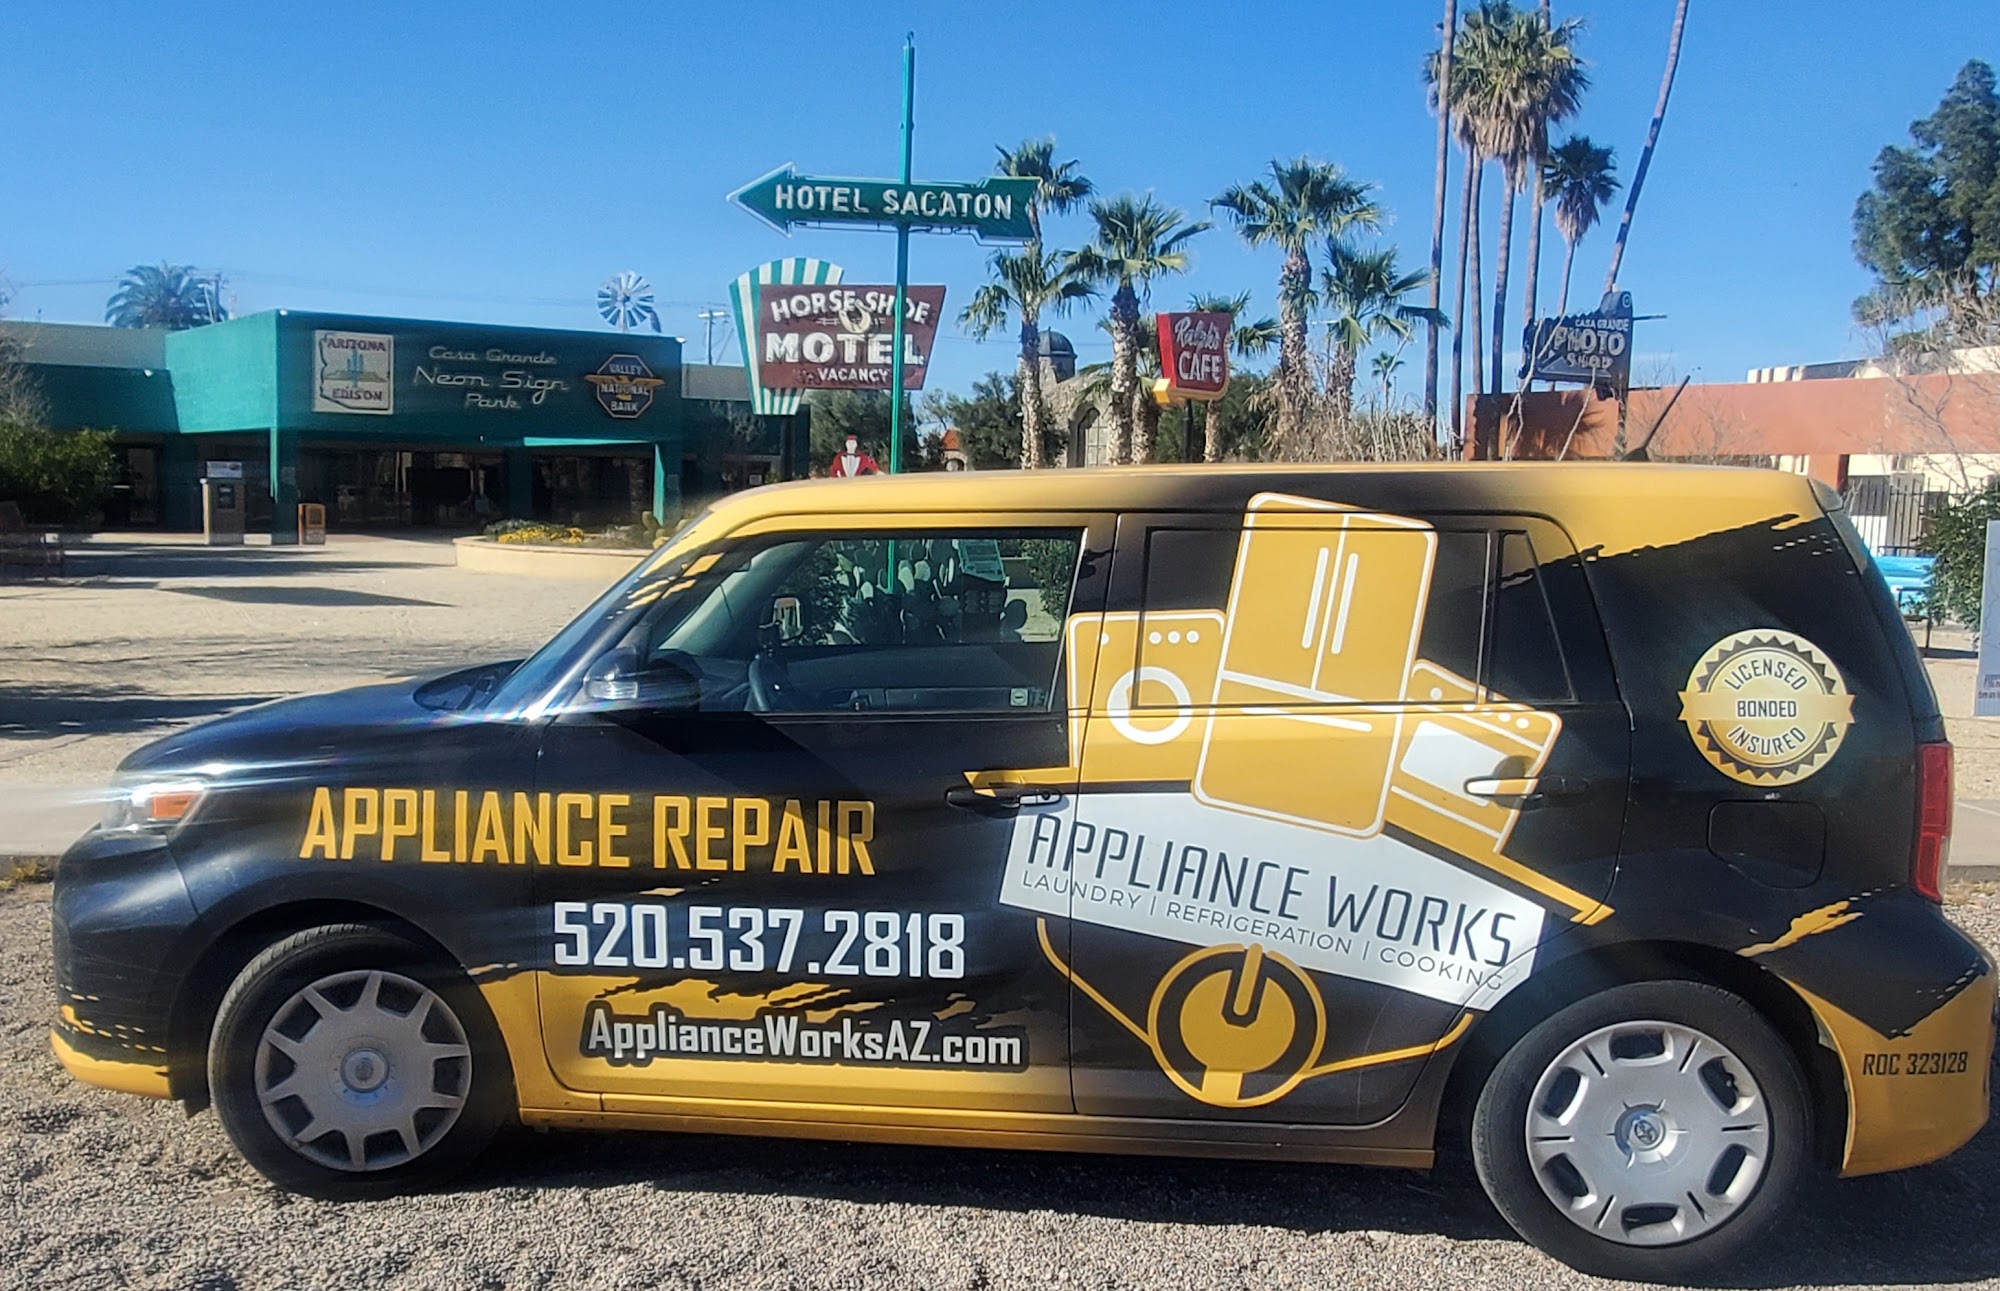 Appliance Works: Casa Grande and Maricopa Appliance Repair